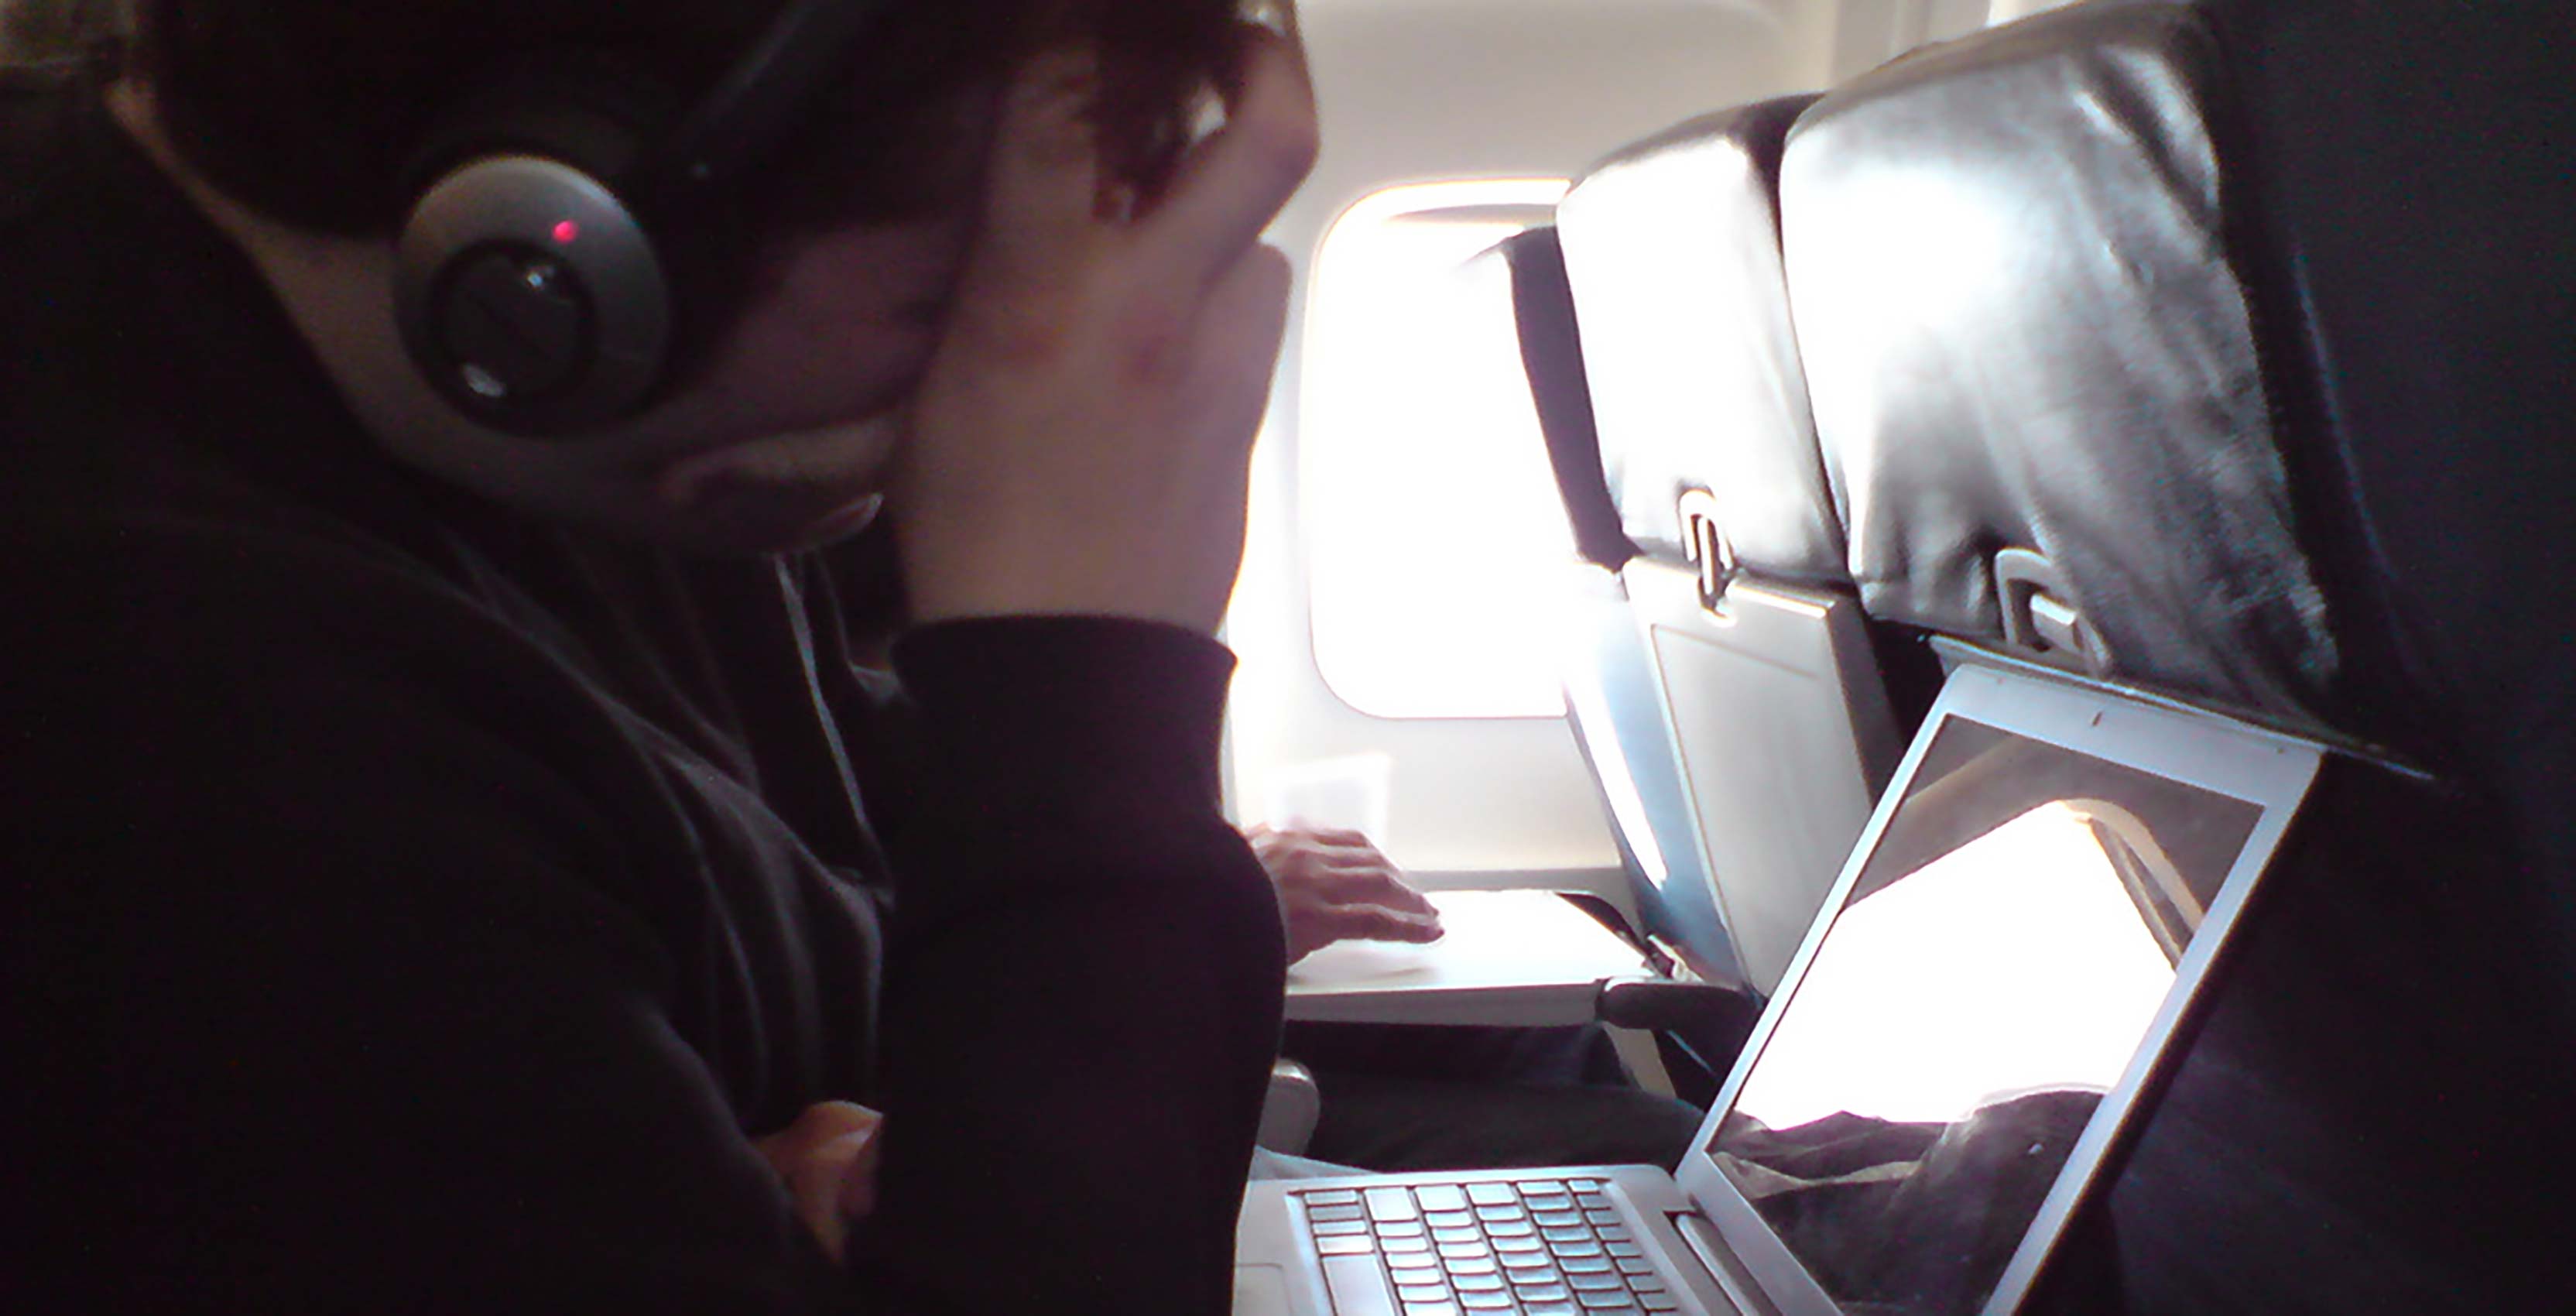 Laptop on airplane